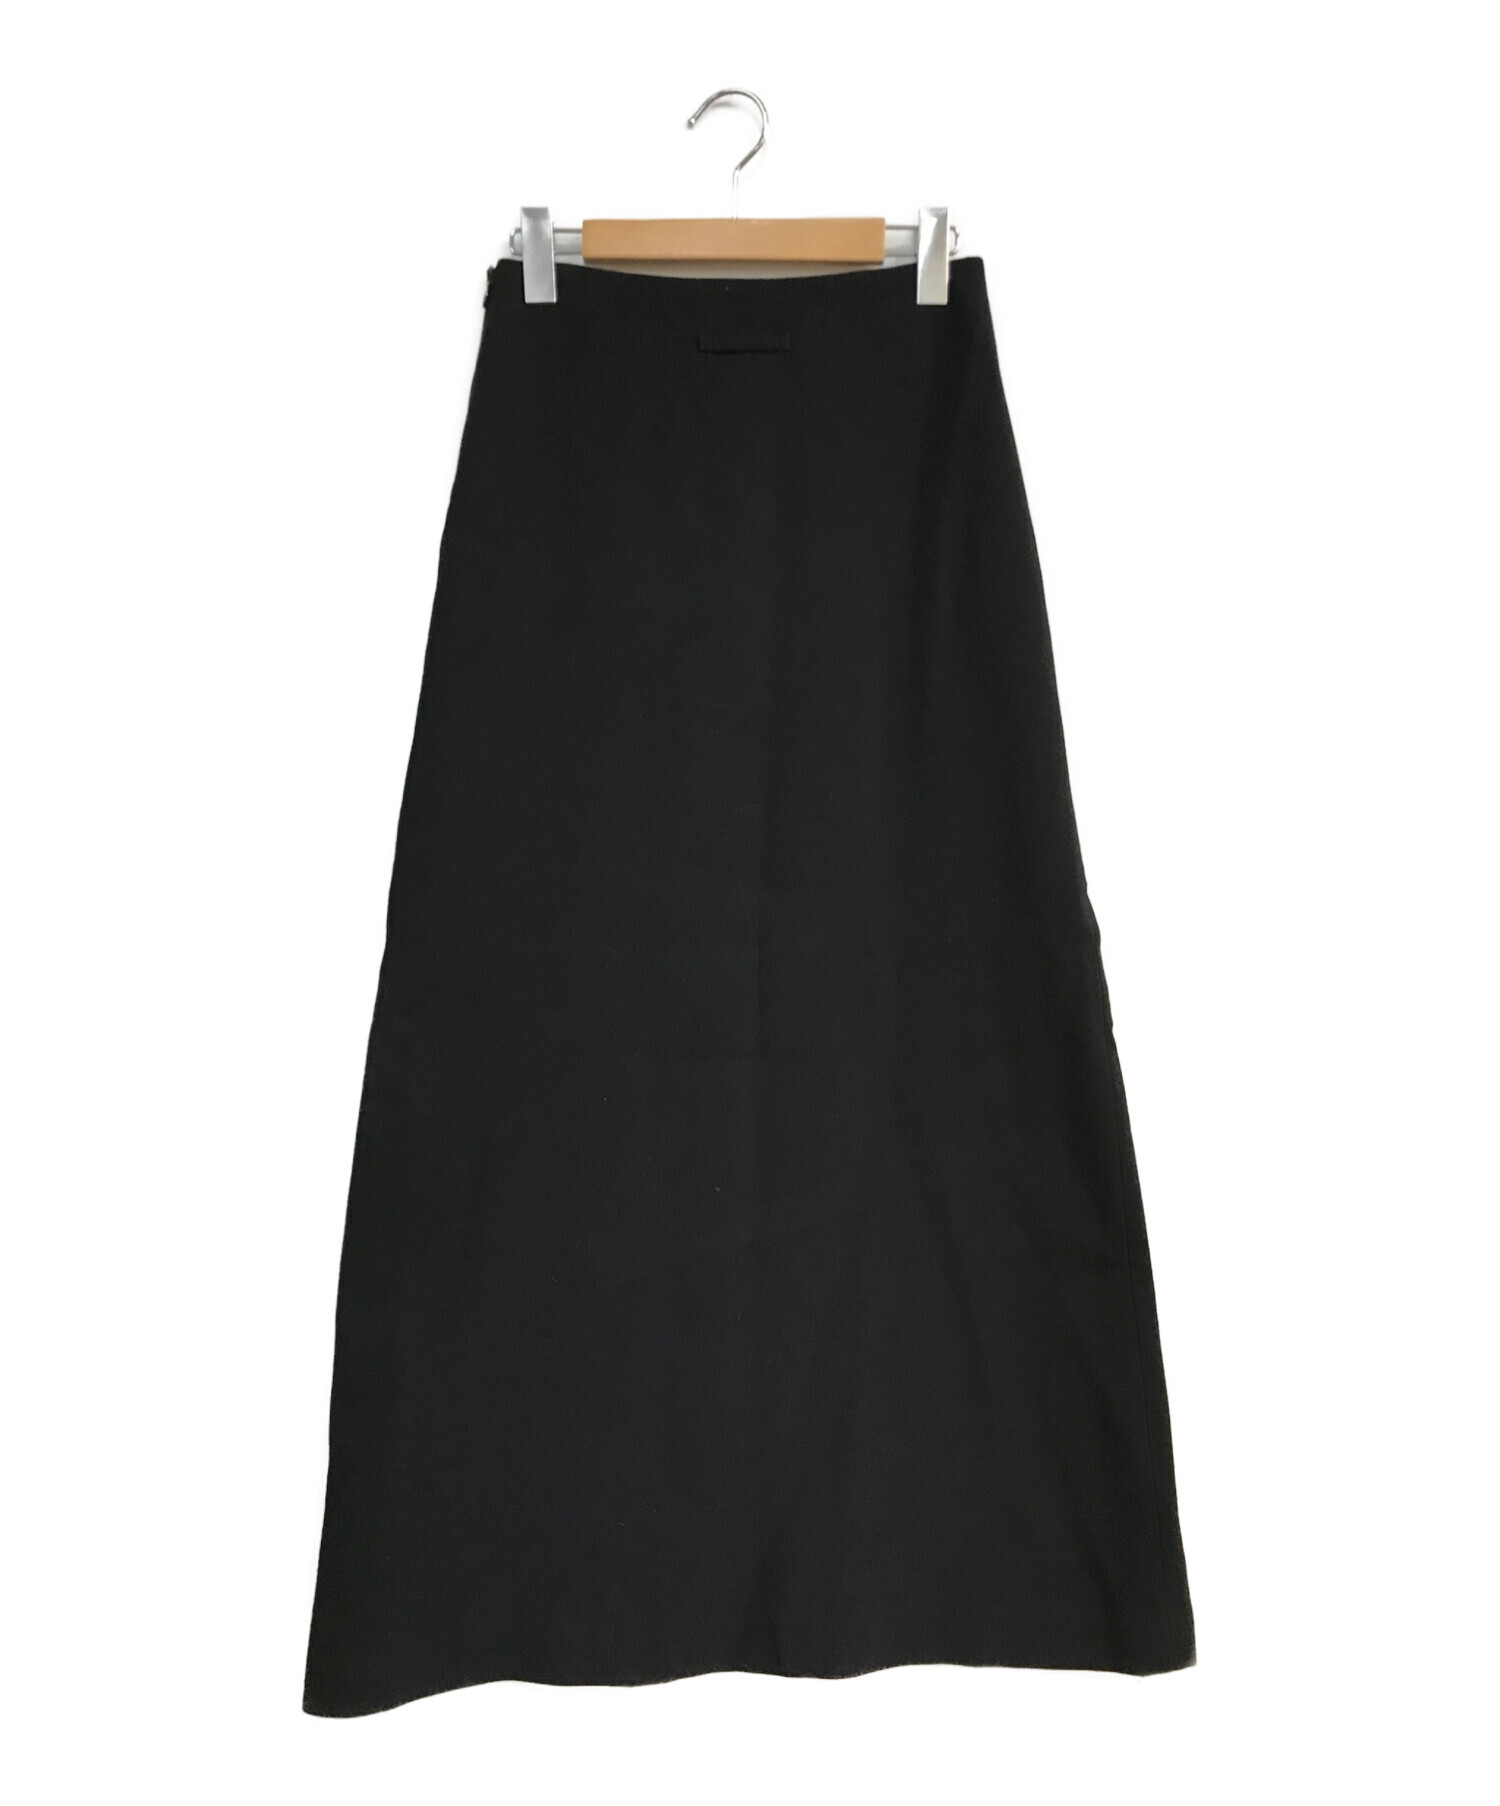 Jean Paul Gaultier FEMME (ジャンポールゴルチェフェム) ウール混ロングスカート　ブラック ブラック サイズ:40